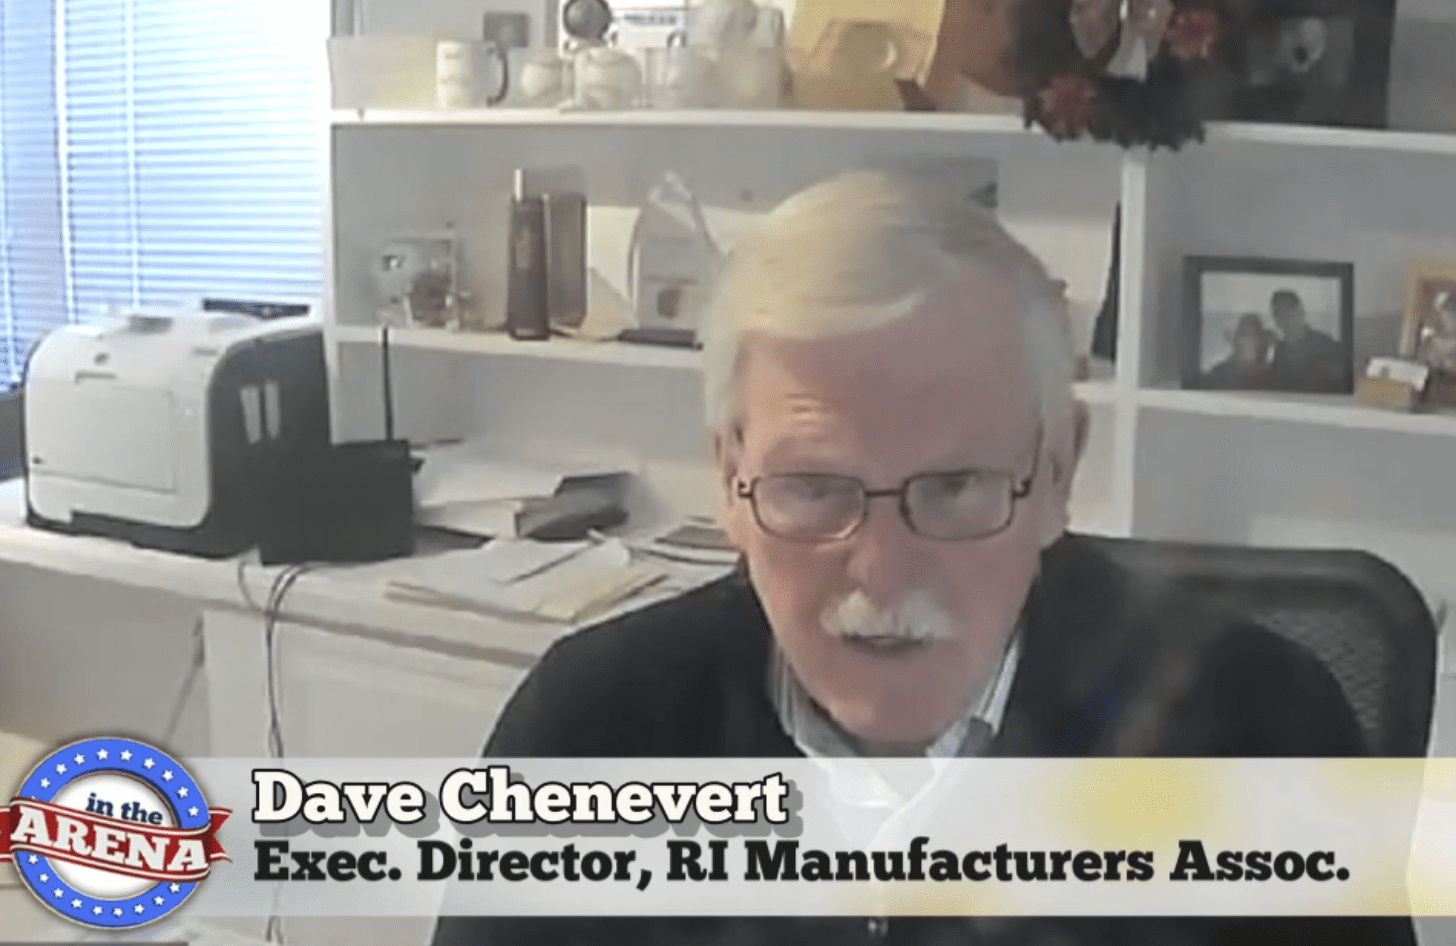 Dave chenevert, sc director ri manufacturers assoc.